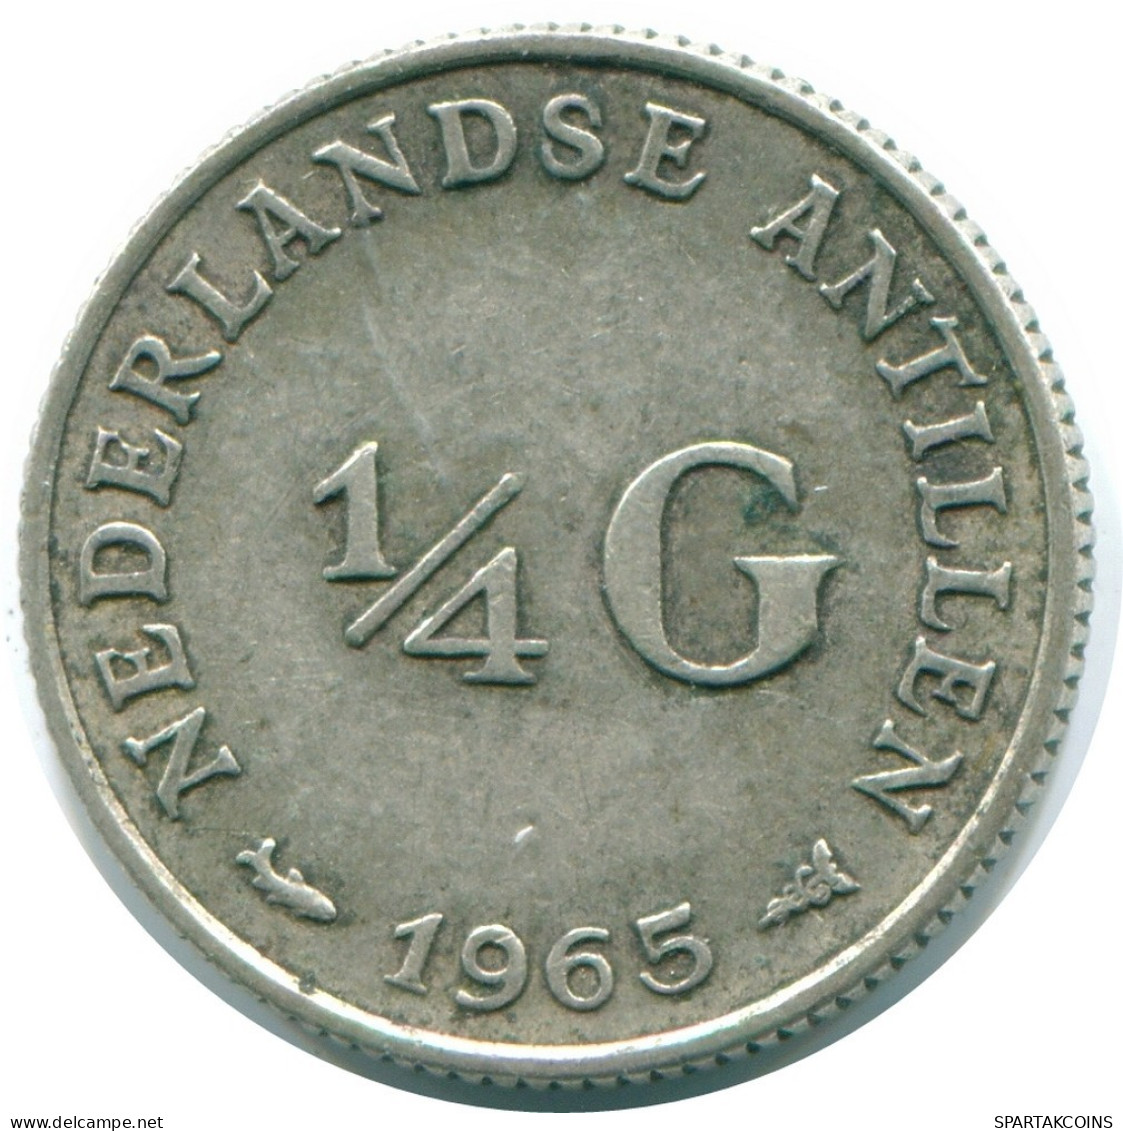 1/4 GULDEN 1965 NETHERLANDS ANTILLES SILVER Colonial Coin #NL11401.4.U.A - Antilles Néerlandaises